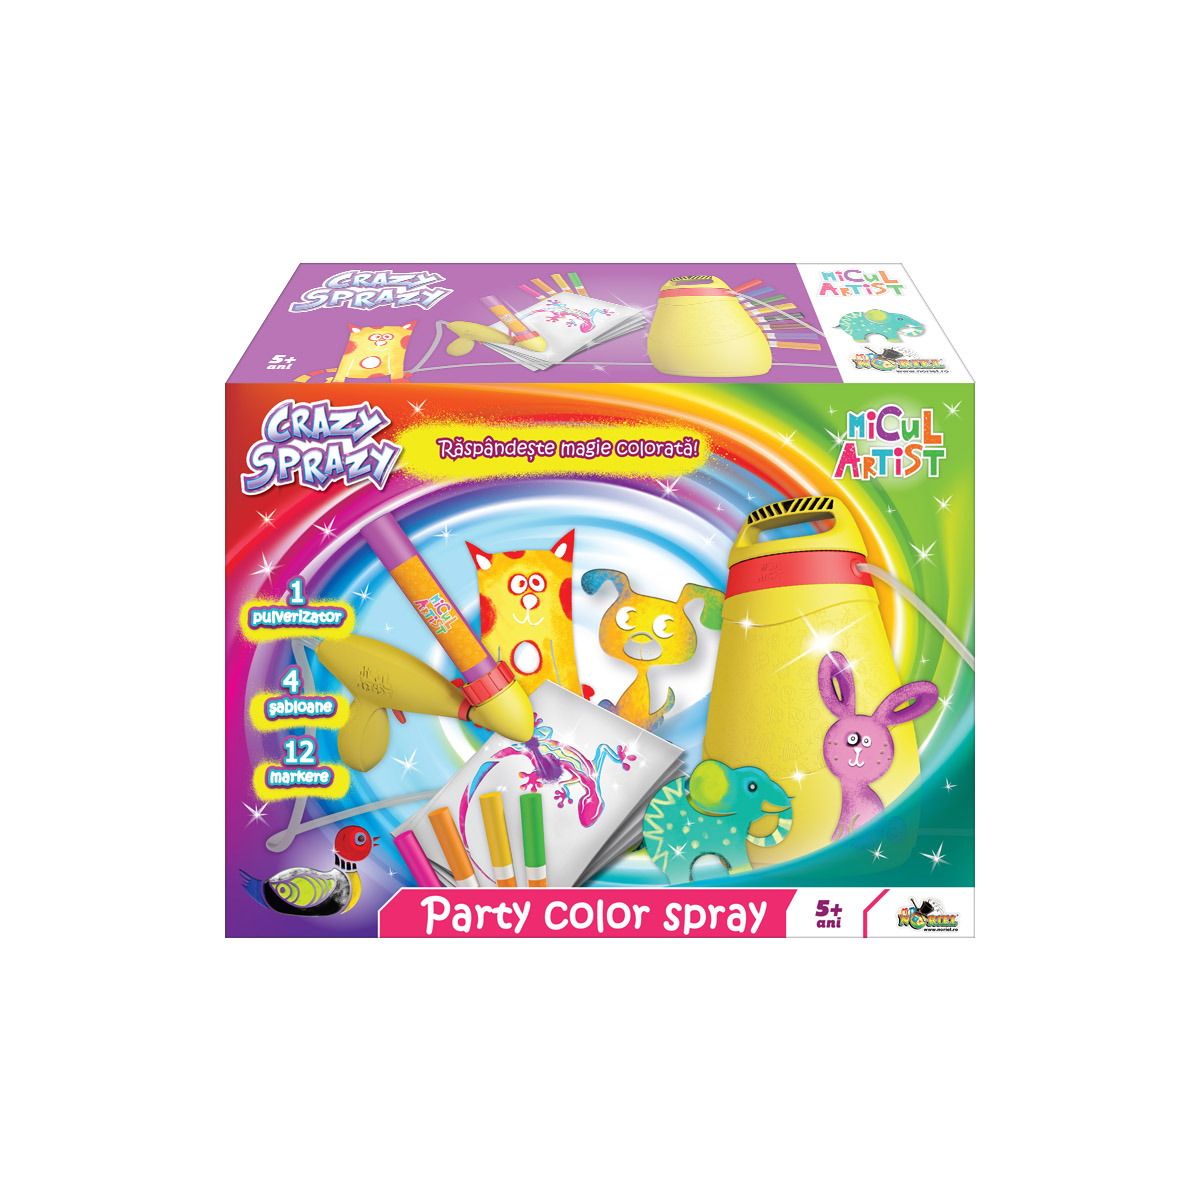 Micul Artist Party Color Spray - Crazy Sprazy